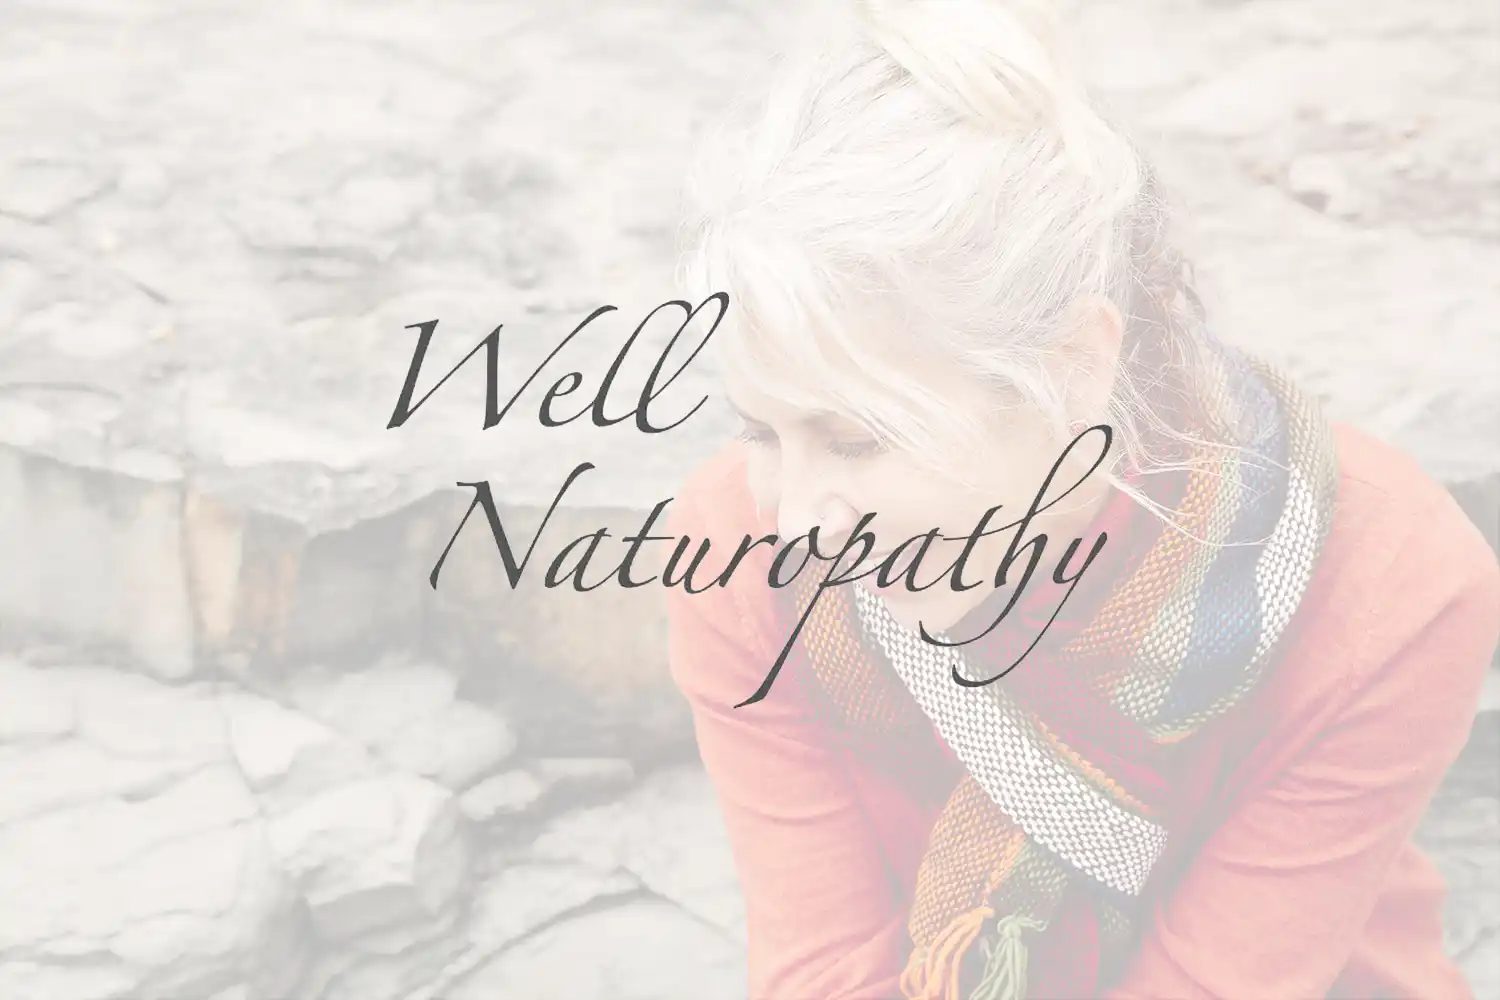 WordPress website - Well Naturopathy - Naturopathic practice